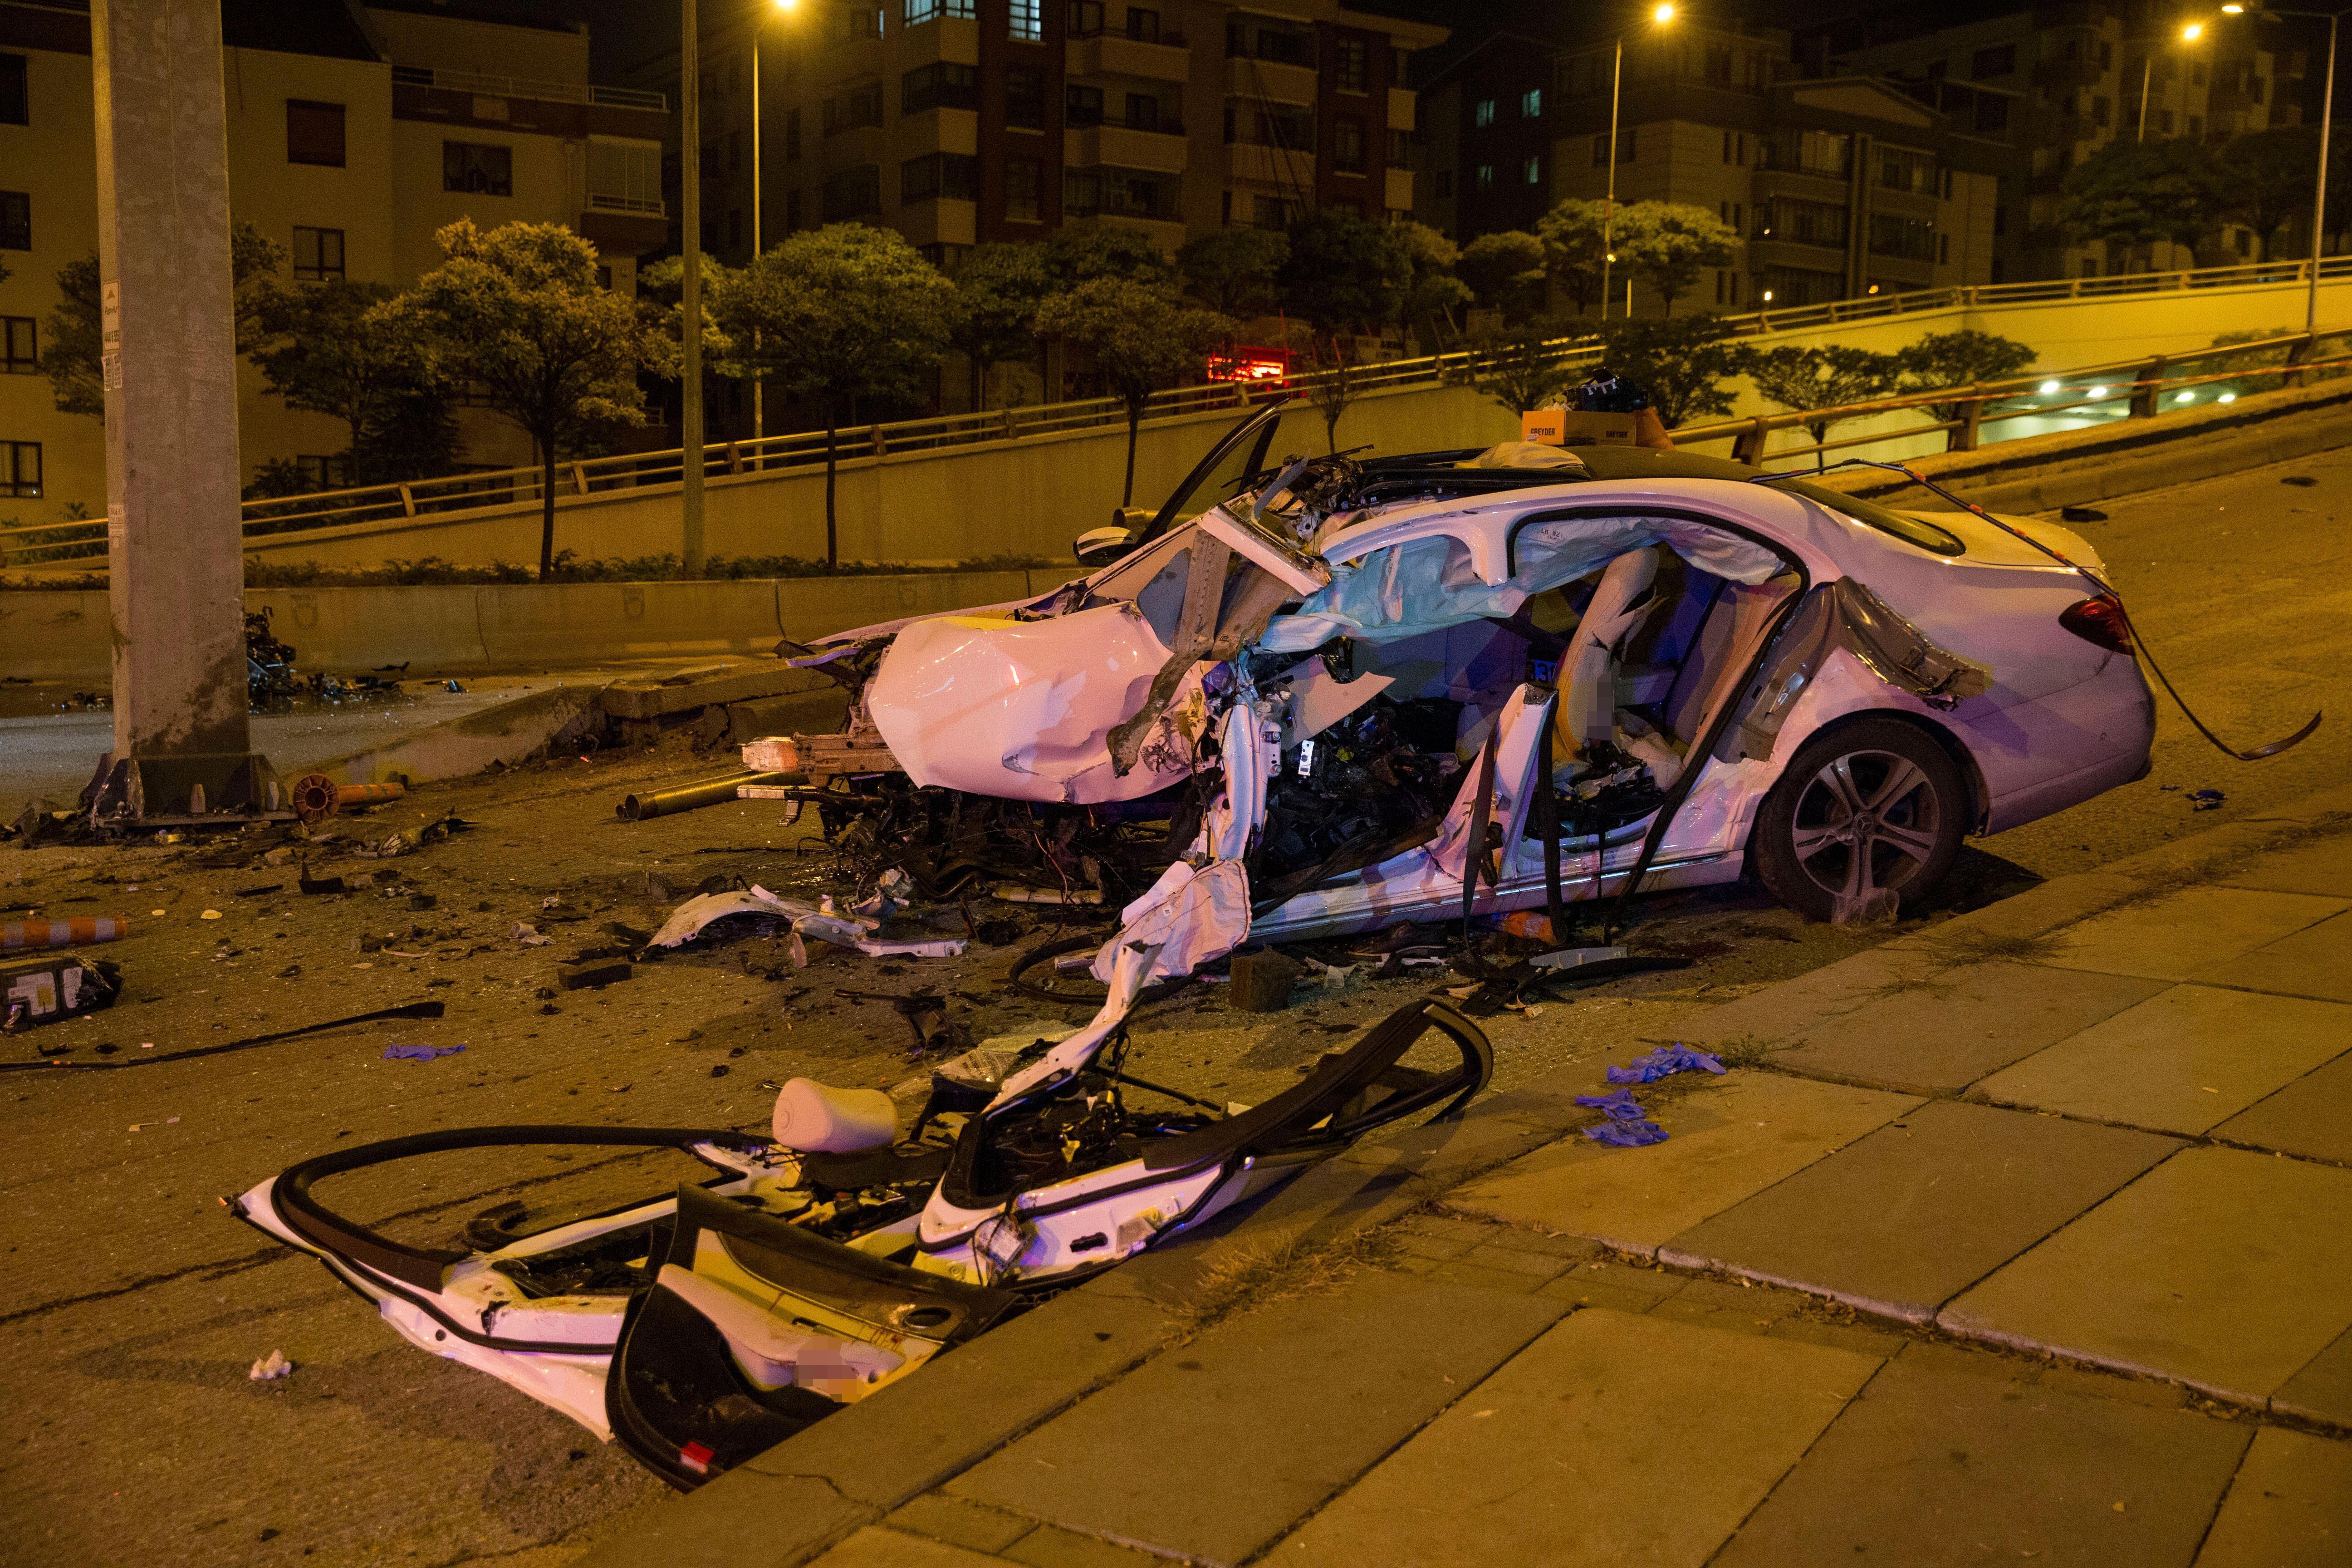 Ankarada feci kaza: Otomobil levhaya çarptı